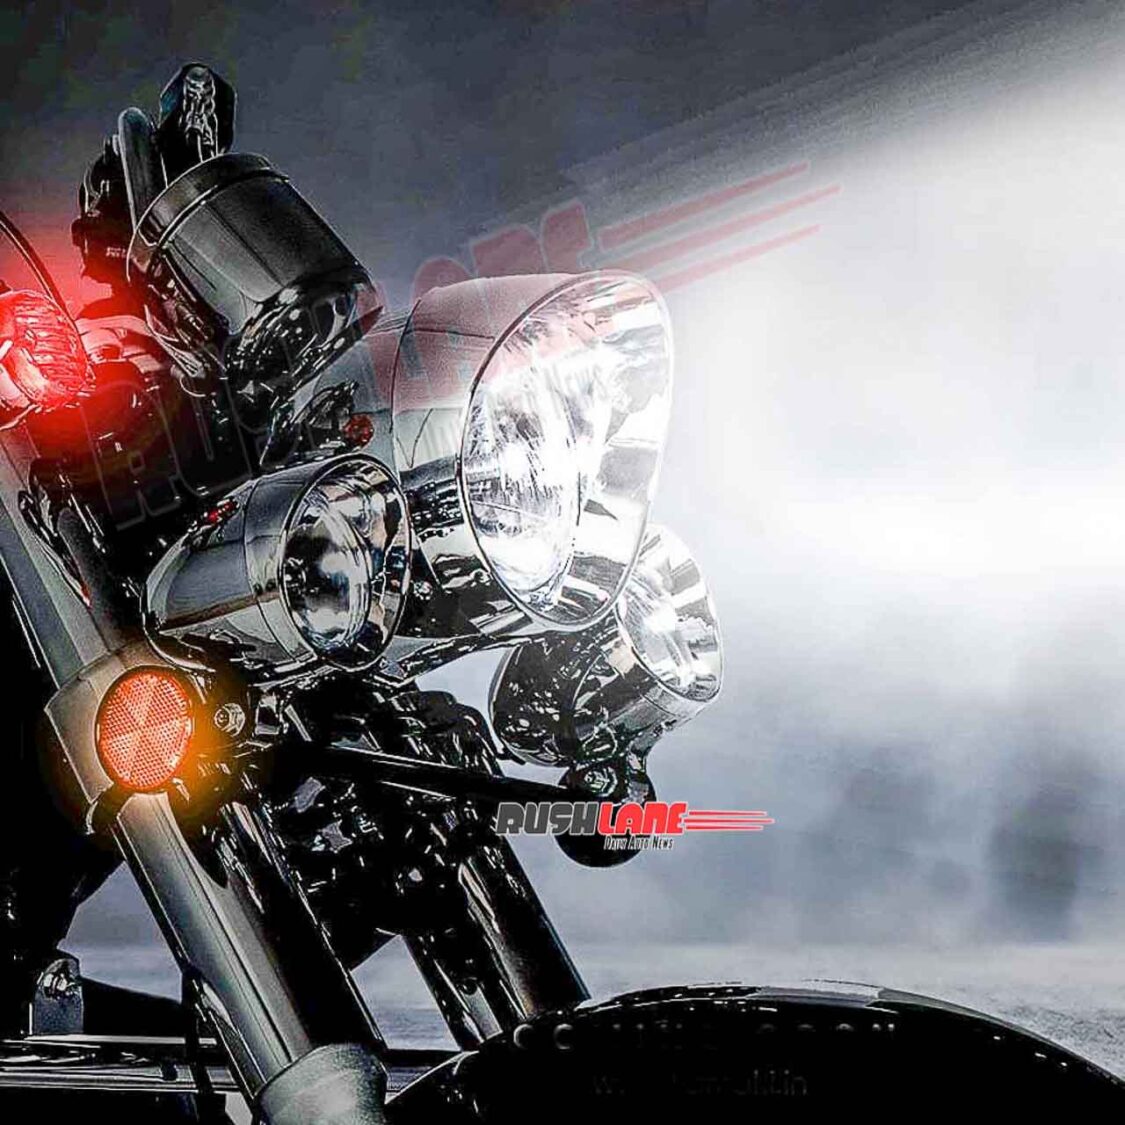 Komaki Electric Cruiser Motorcycle - Ranger Teased